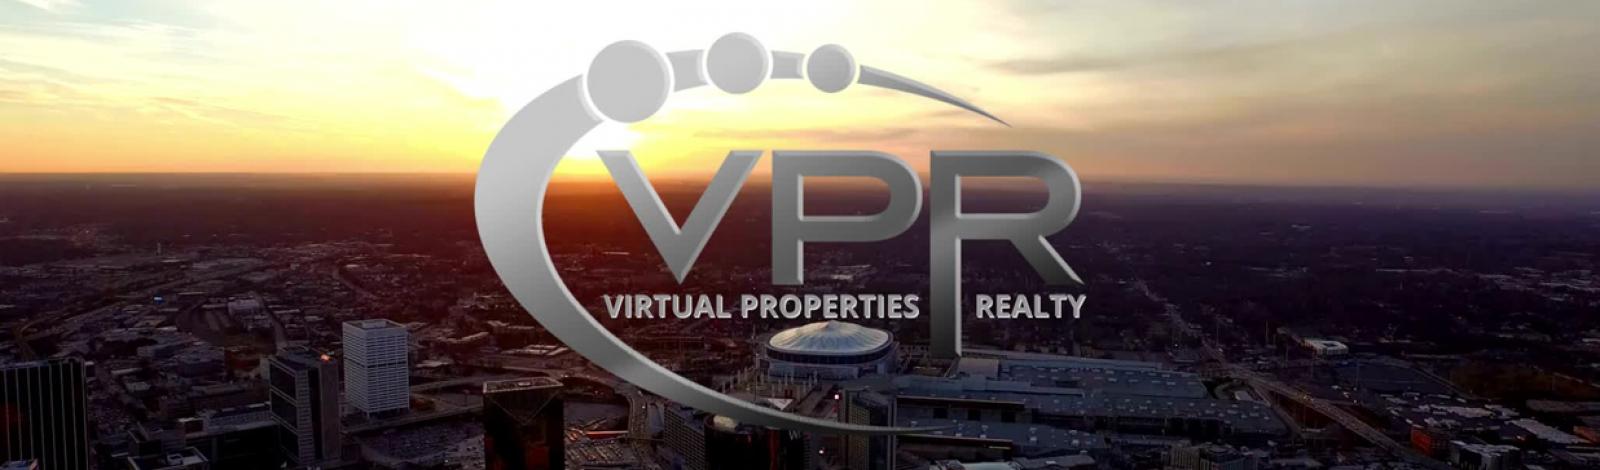 Virtual Properties banner